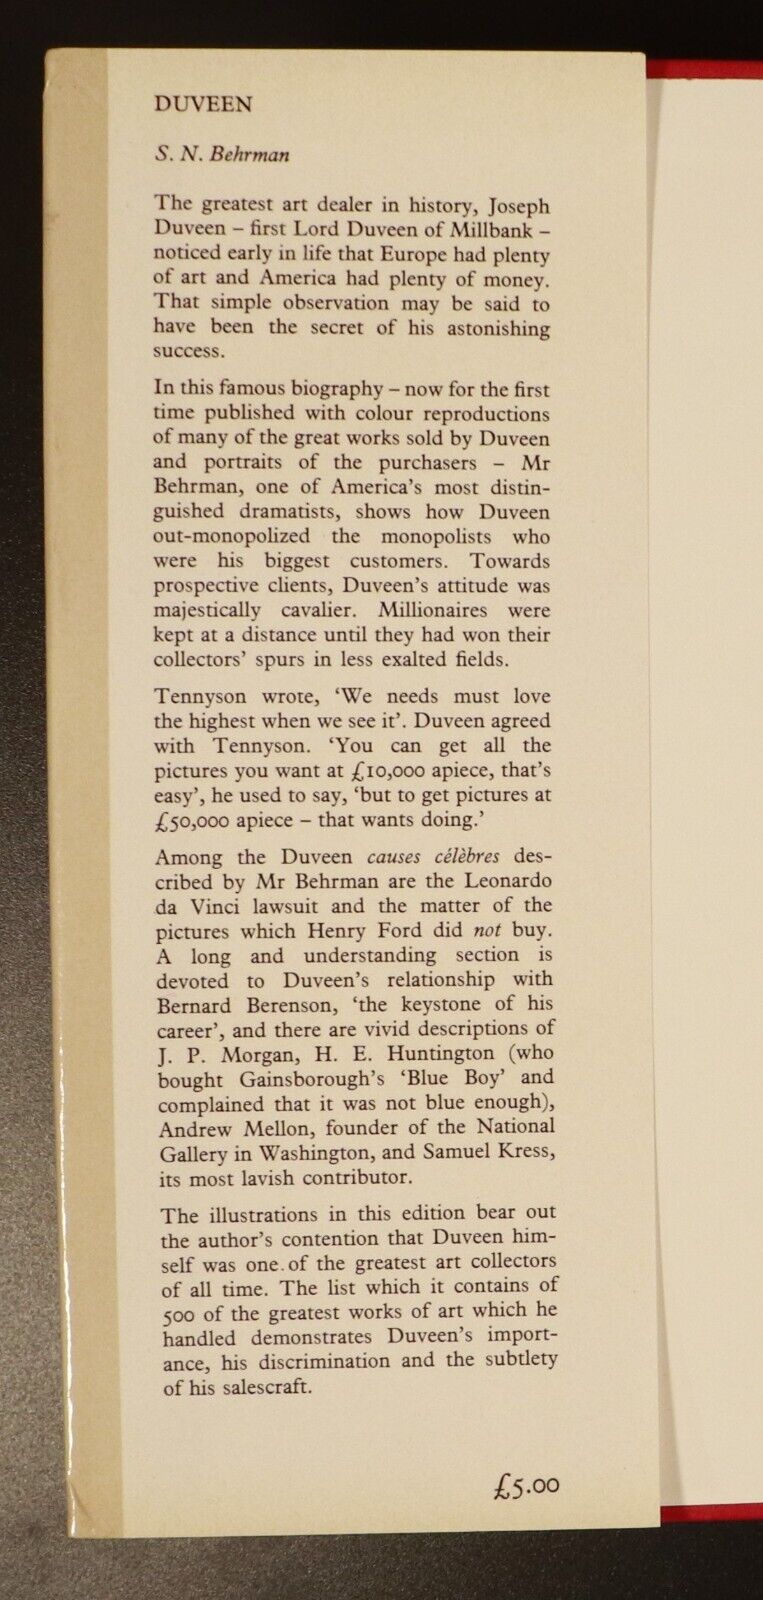 1972 Duveen by S.N. Behrman Vintage British Art Dealer History Book - 0